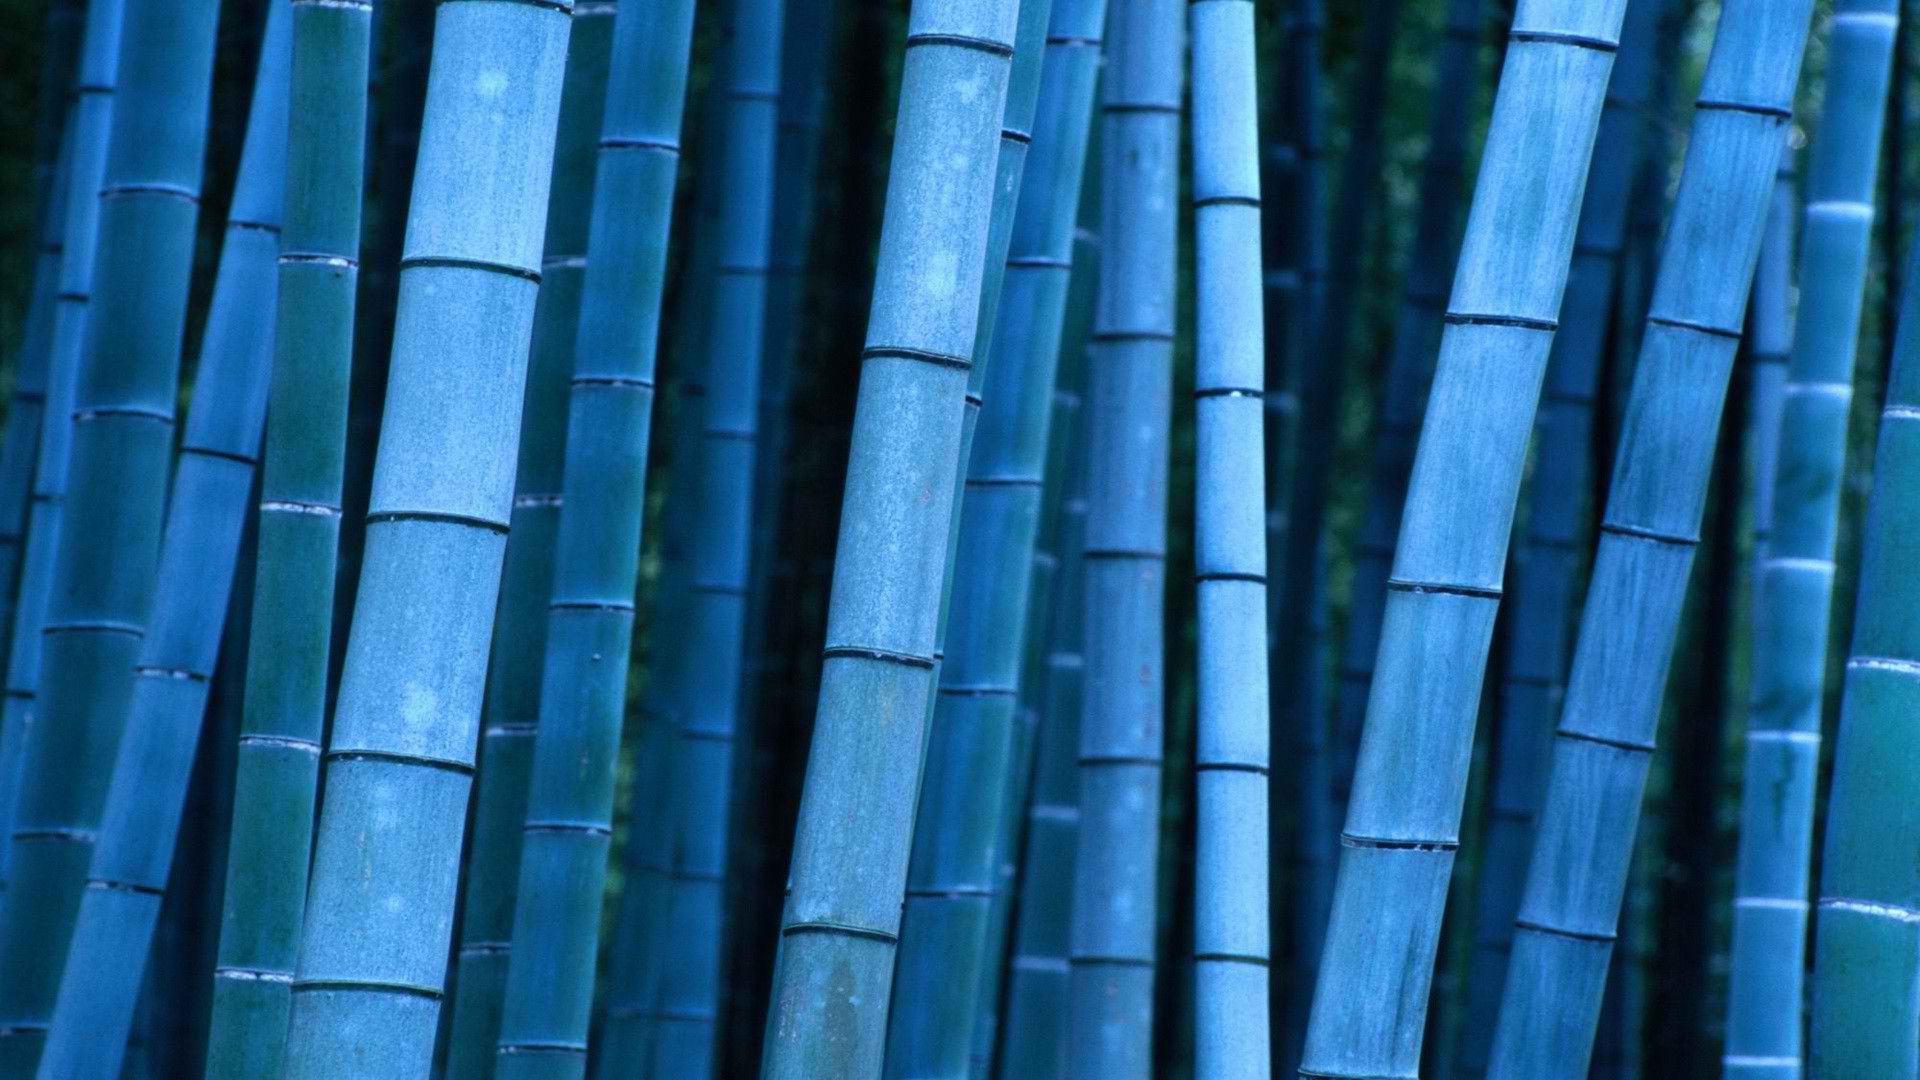 Download Blue Bamboo Sticks Wallpaper | Full HD Wallpapers